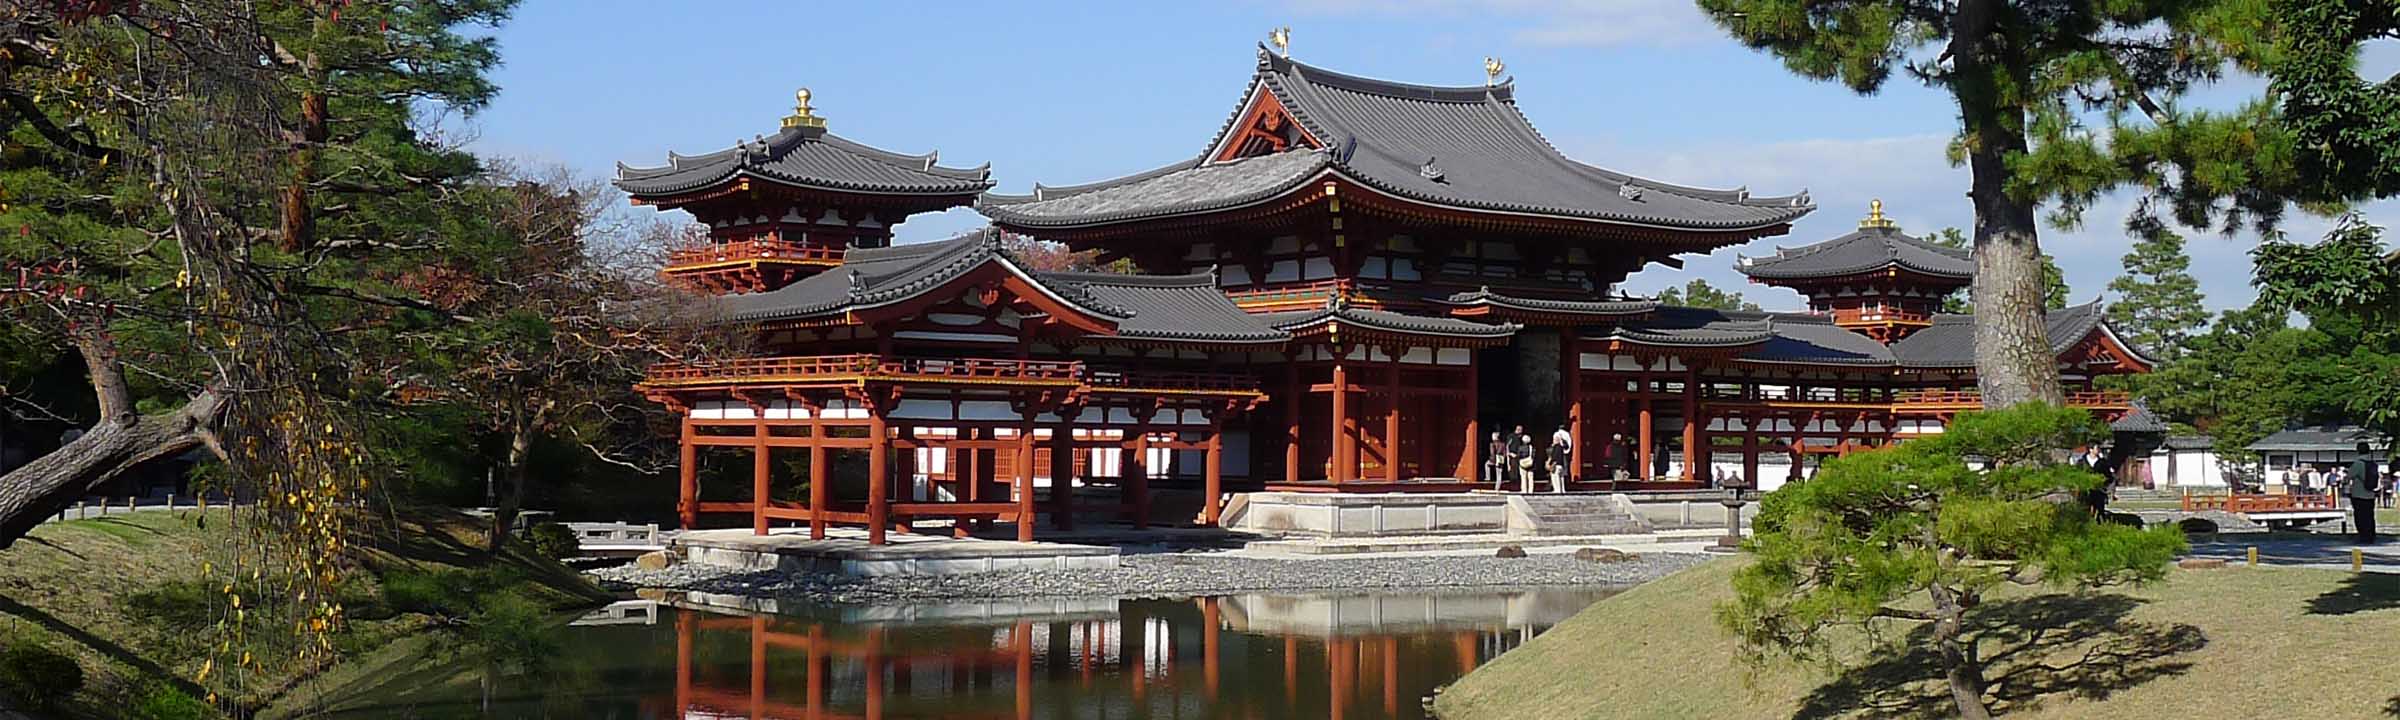 Traditional Kyoto